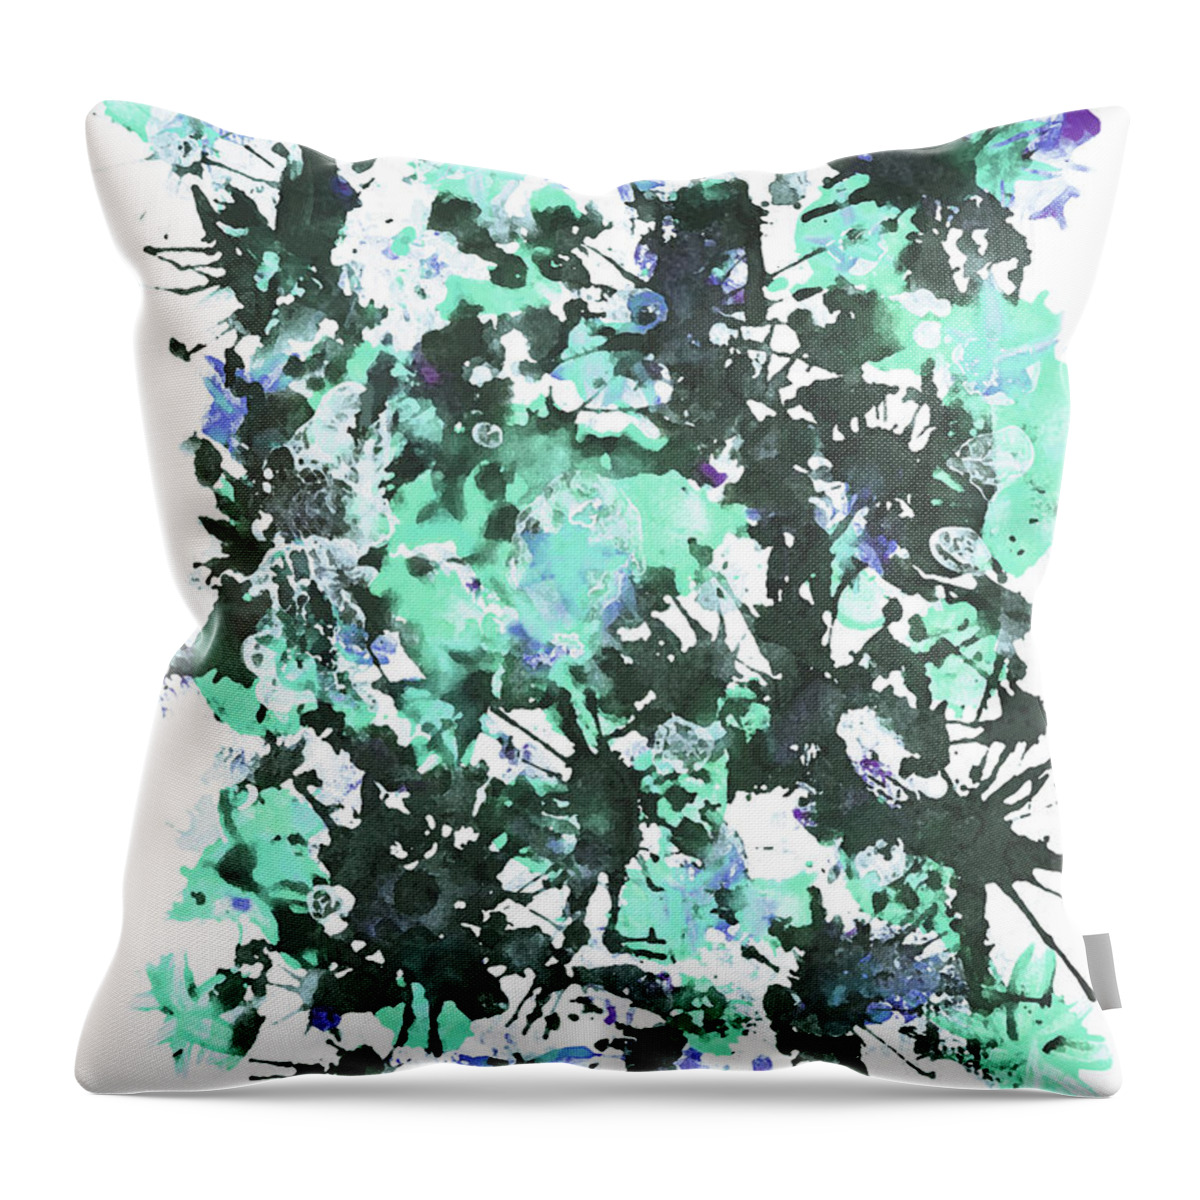 Blue Throw Pillow featuring the digital art Aqua Blue Bouquet #2 by Donald Presnell